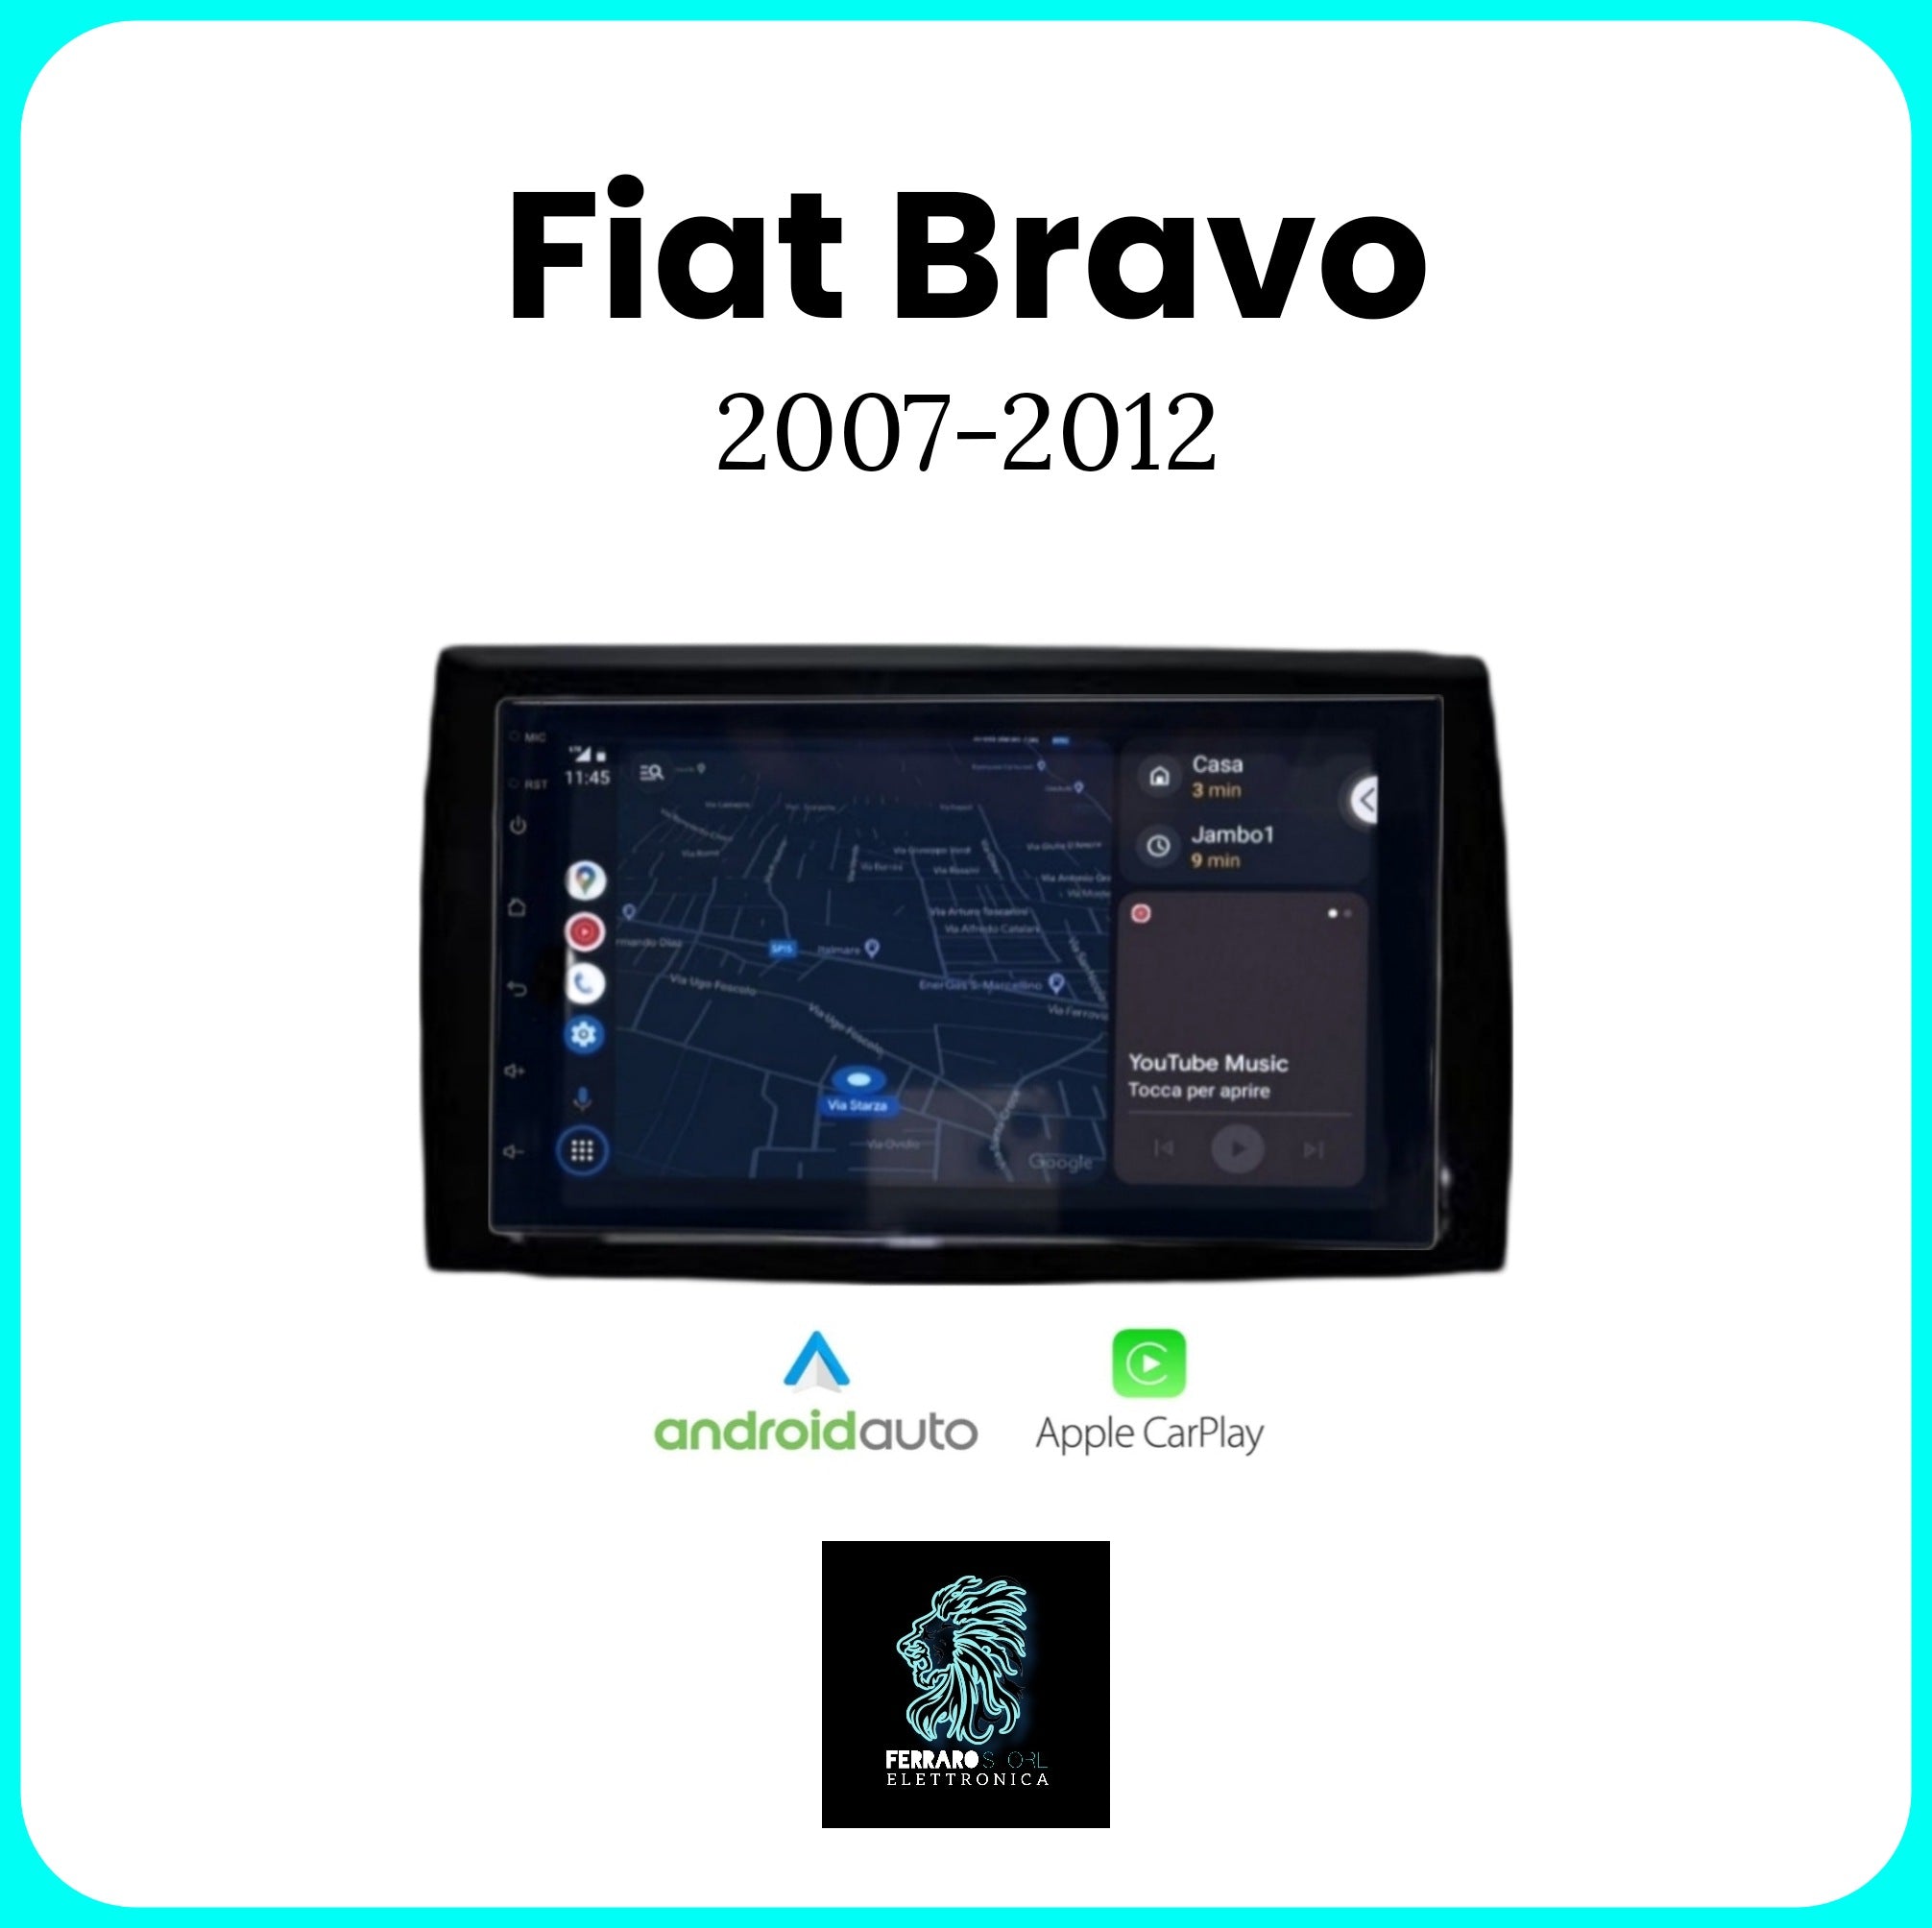 Autoradio per FIAT BRAVO [2007-2012] - 2Din 7"Pollici, Bluetooth, Navigatore, Radio RDS, Touch, USB, Wifi